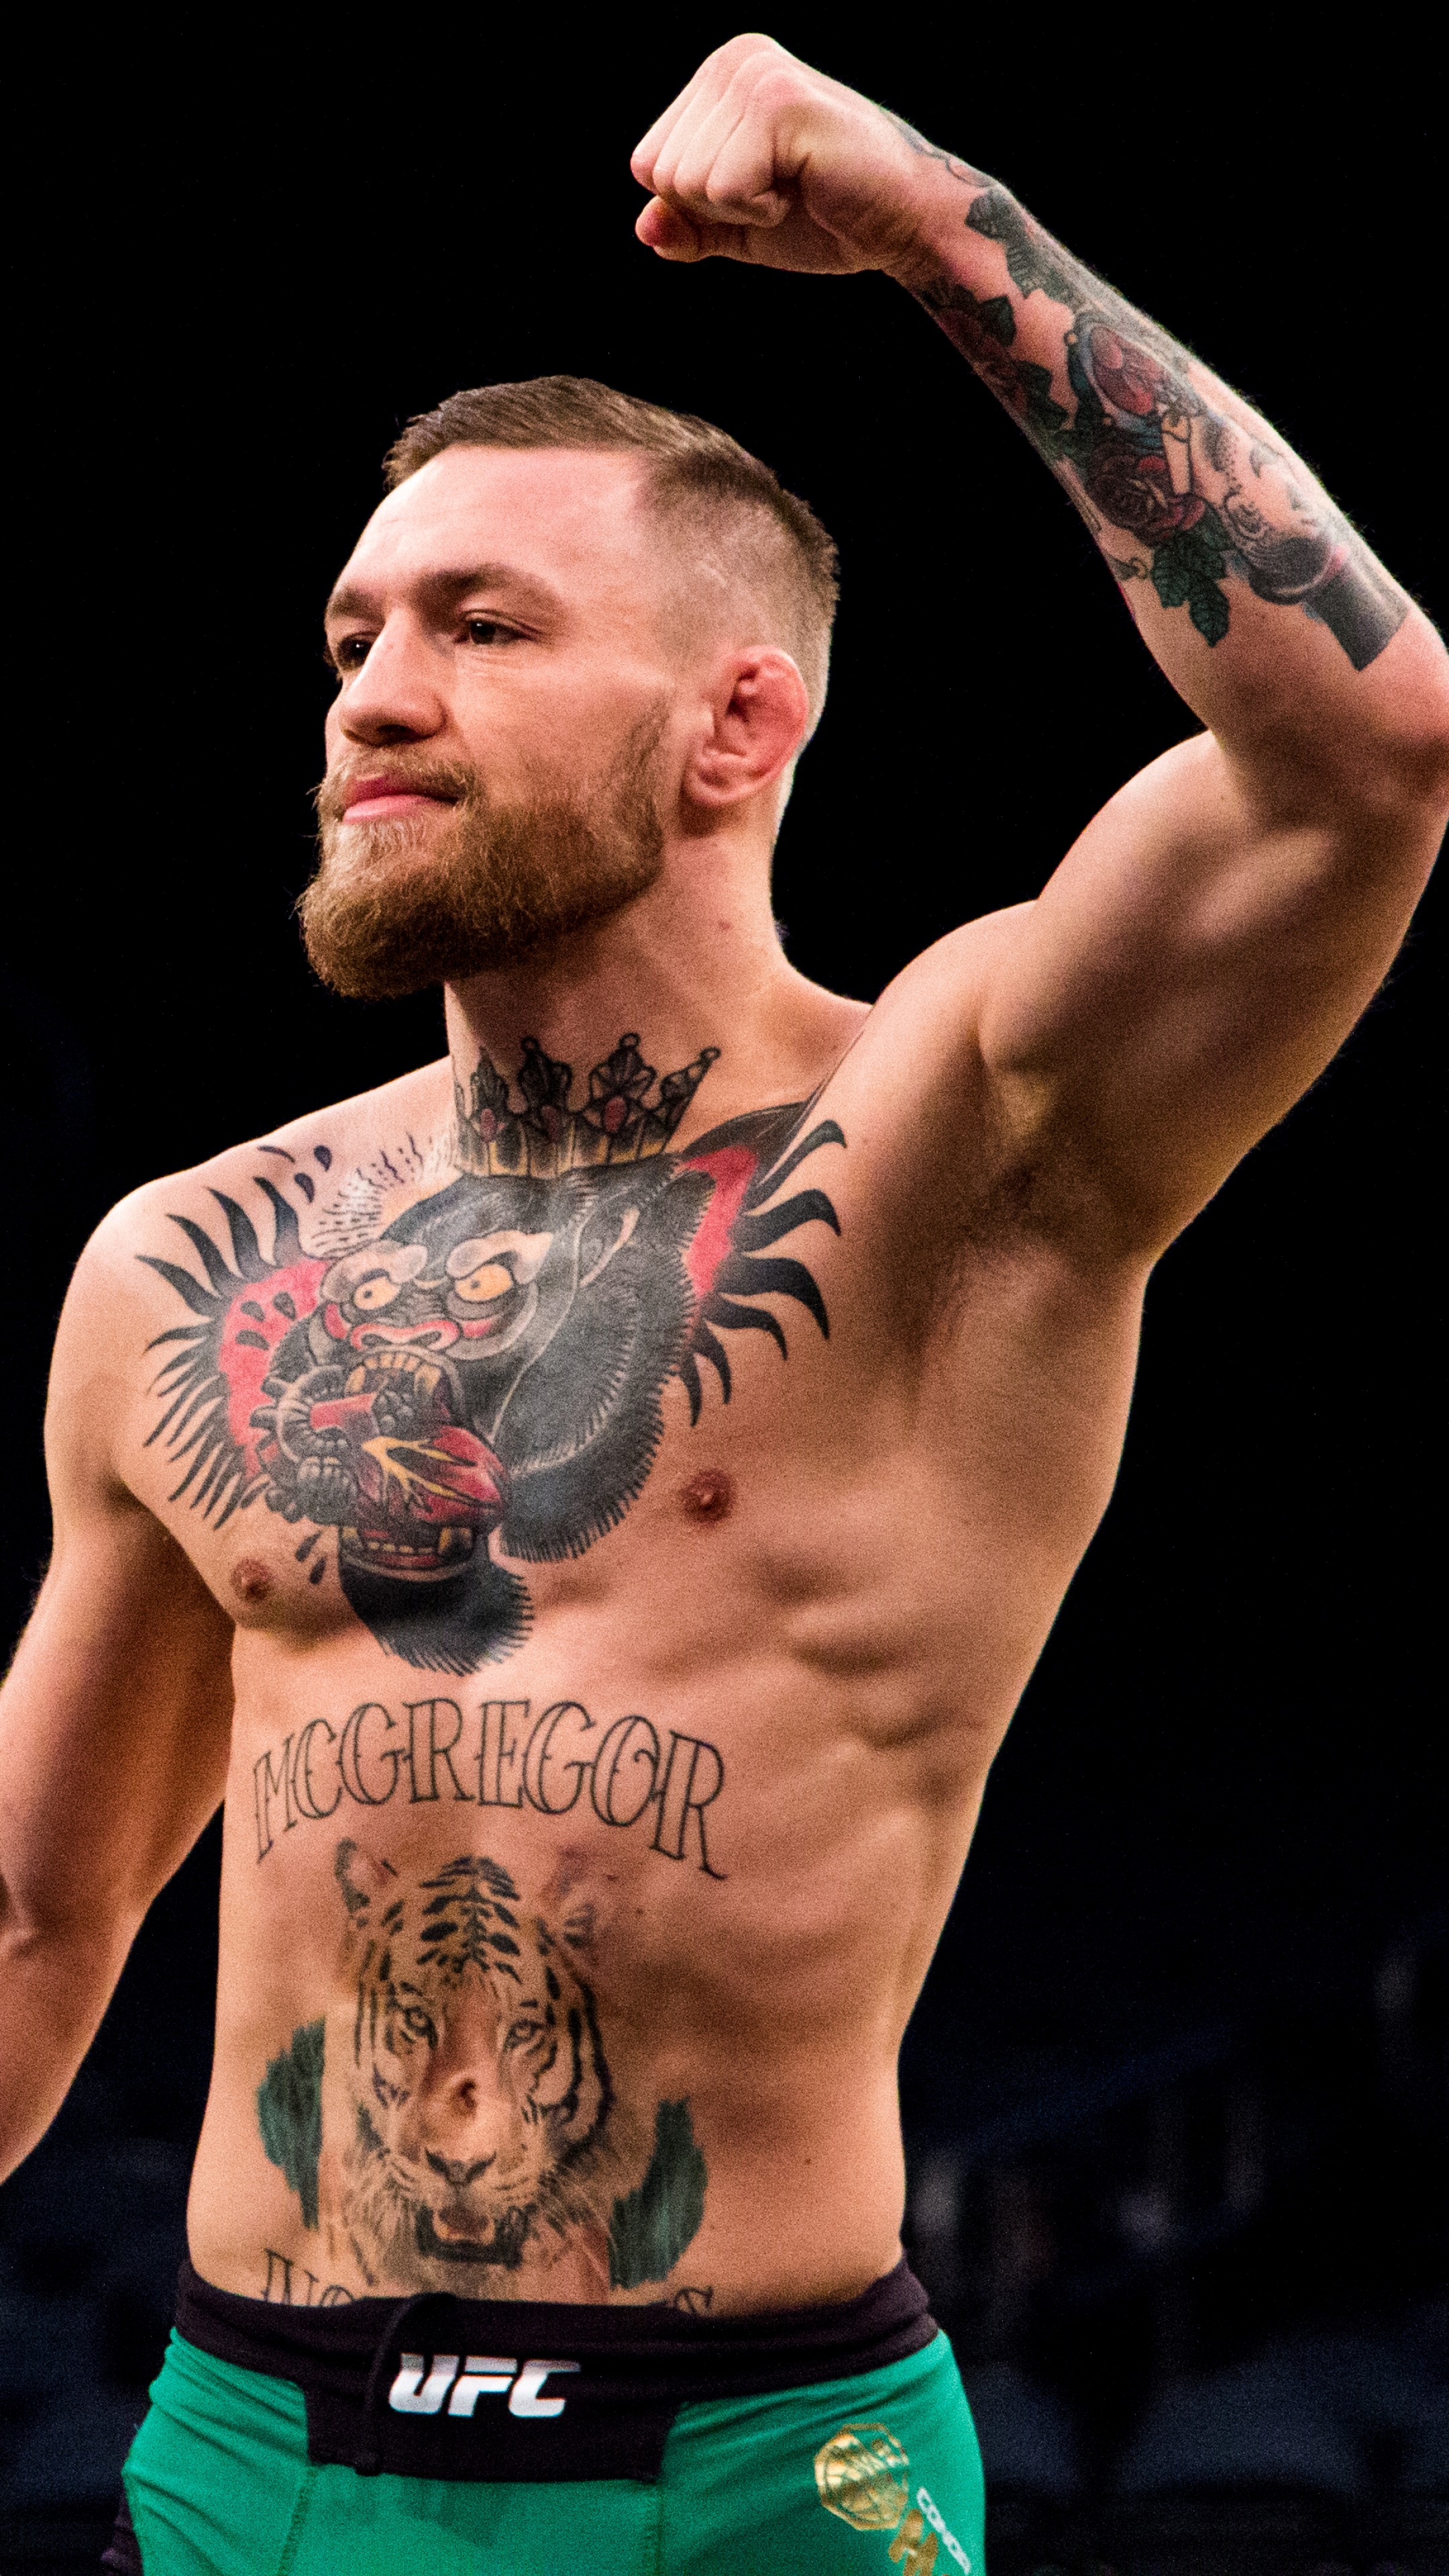 mcgregor wallpaper,tattoo,barechested,wrestler,muscle,arm